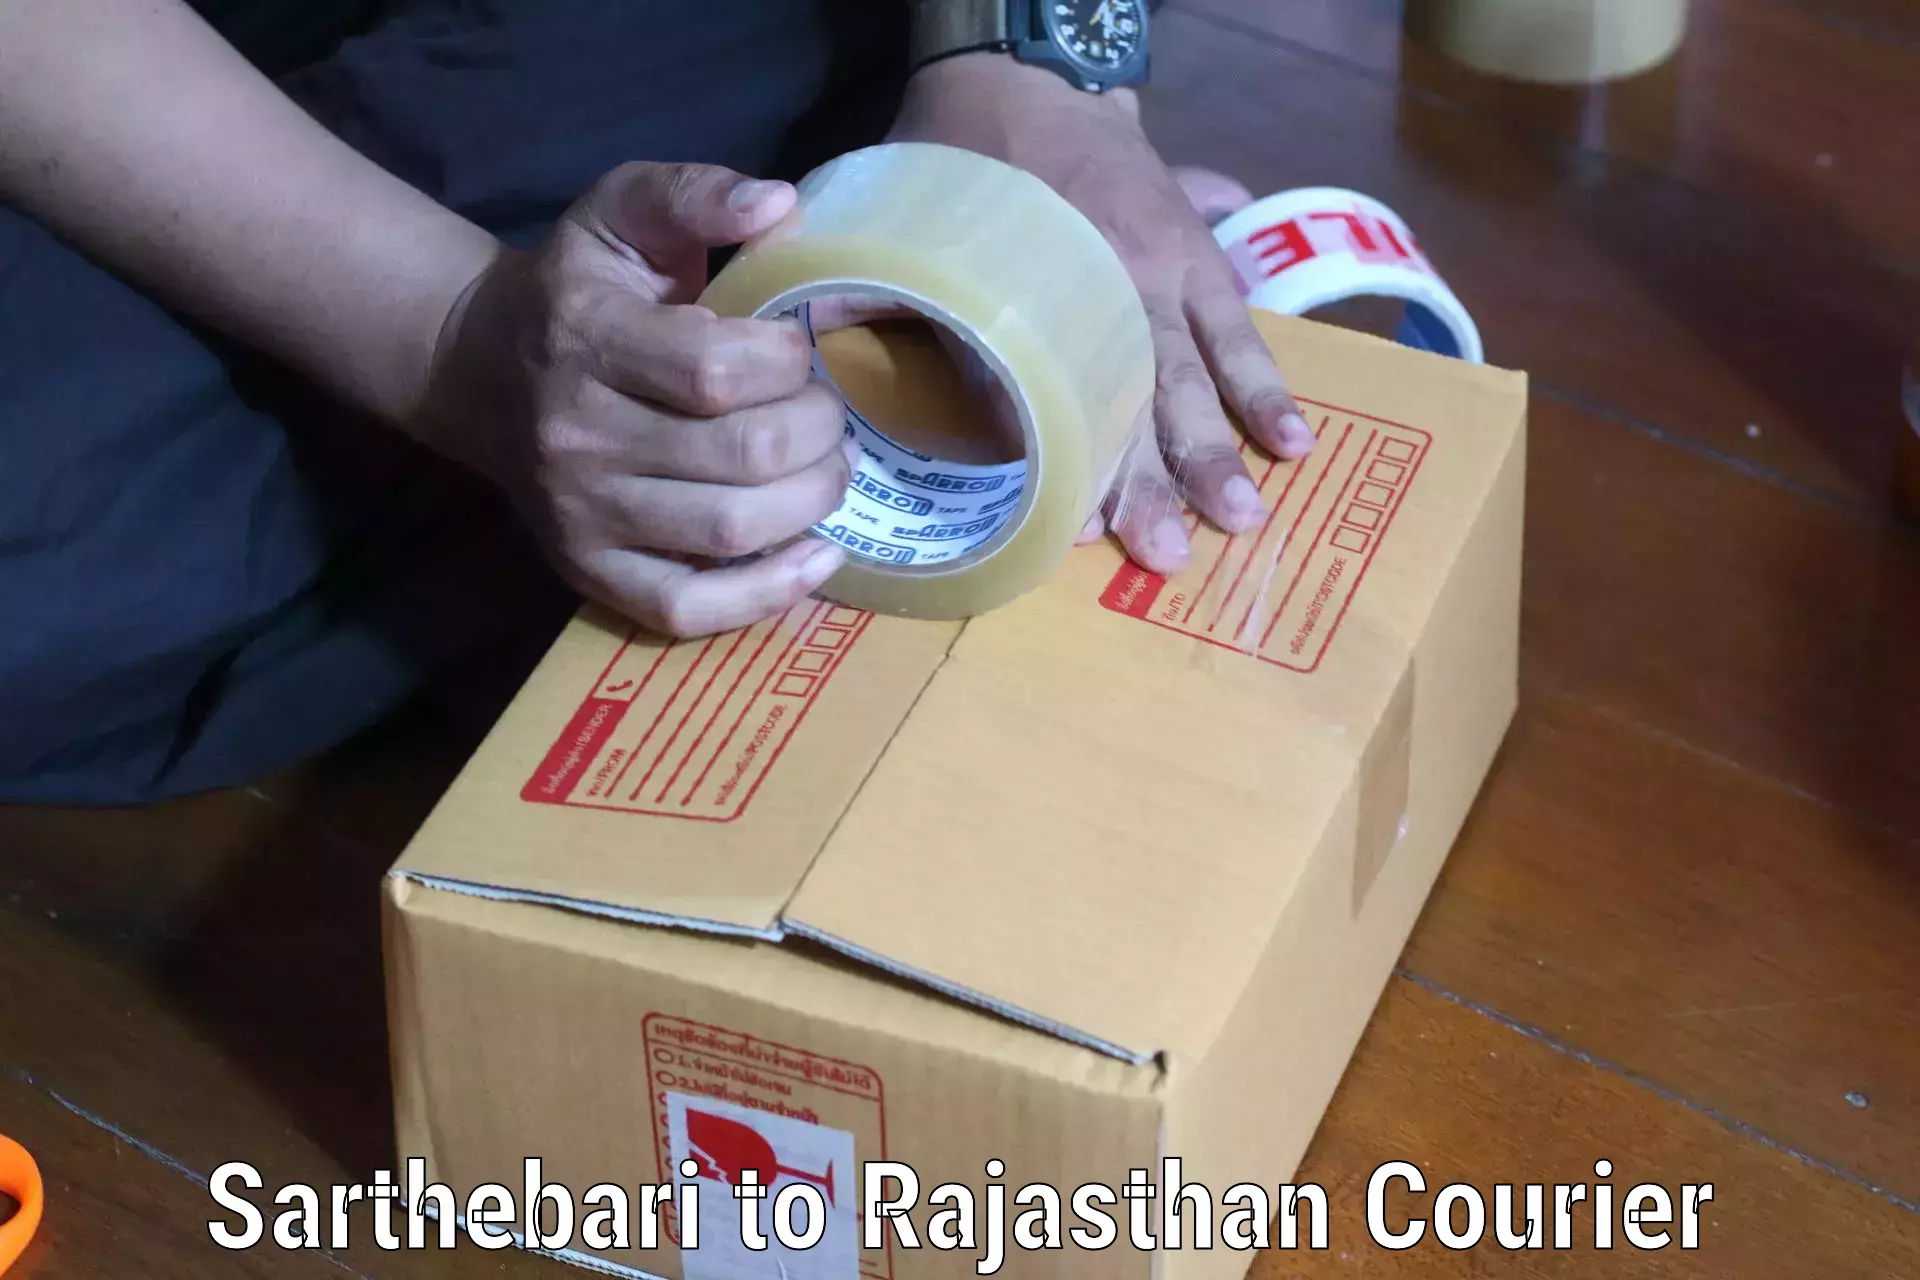 Courier service comparison Sarthebari to Jaipur